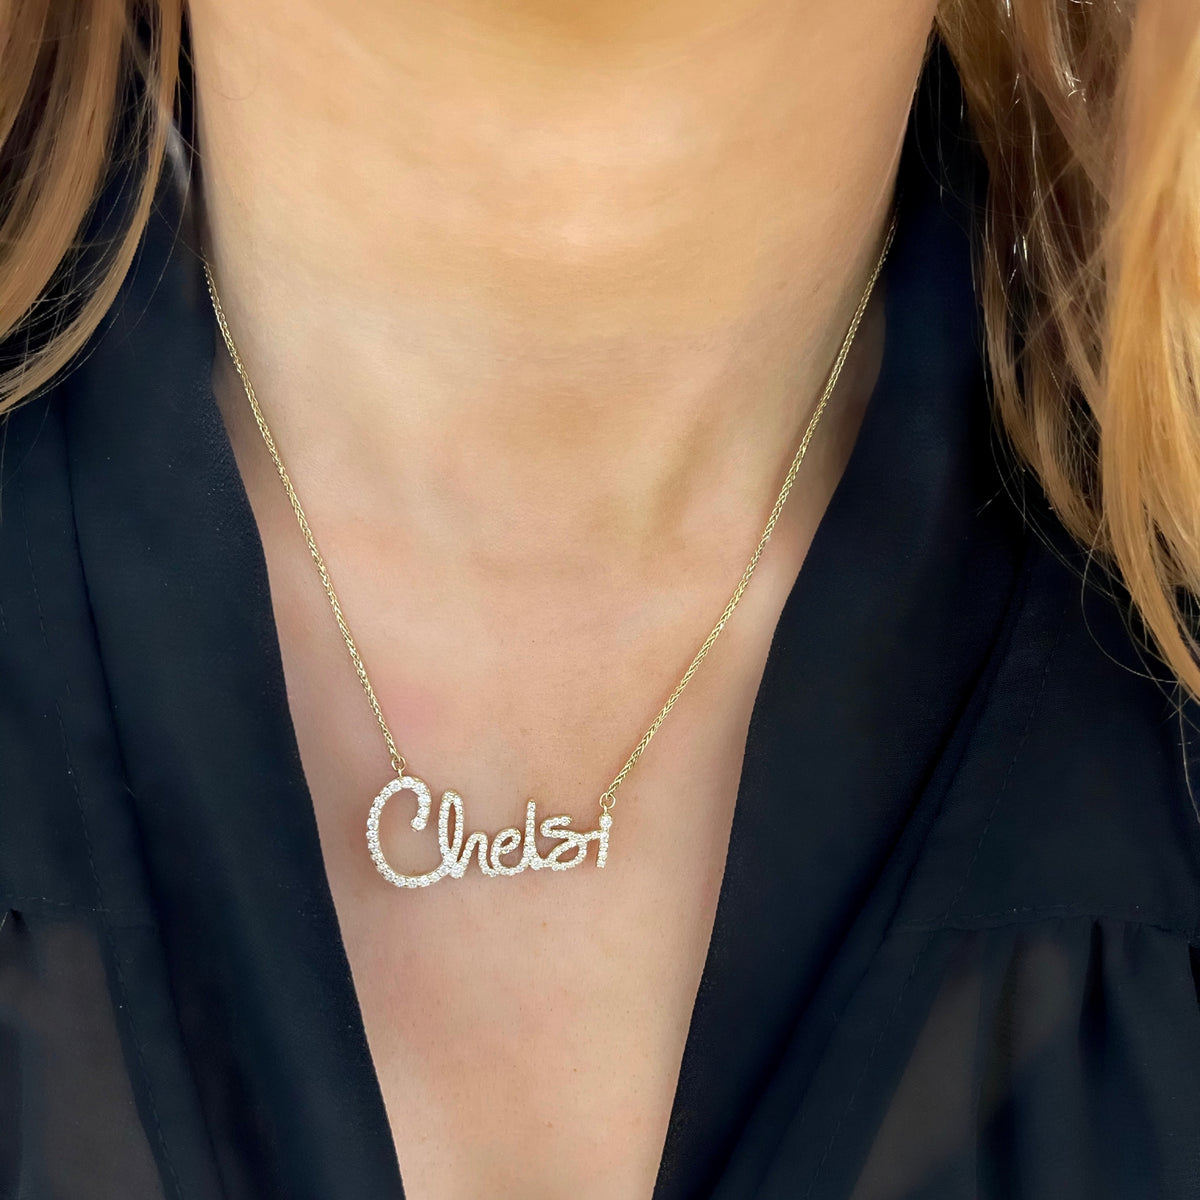 Custom Handwritten Diamond Name Necklace "Chelsi"